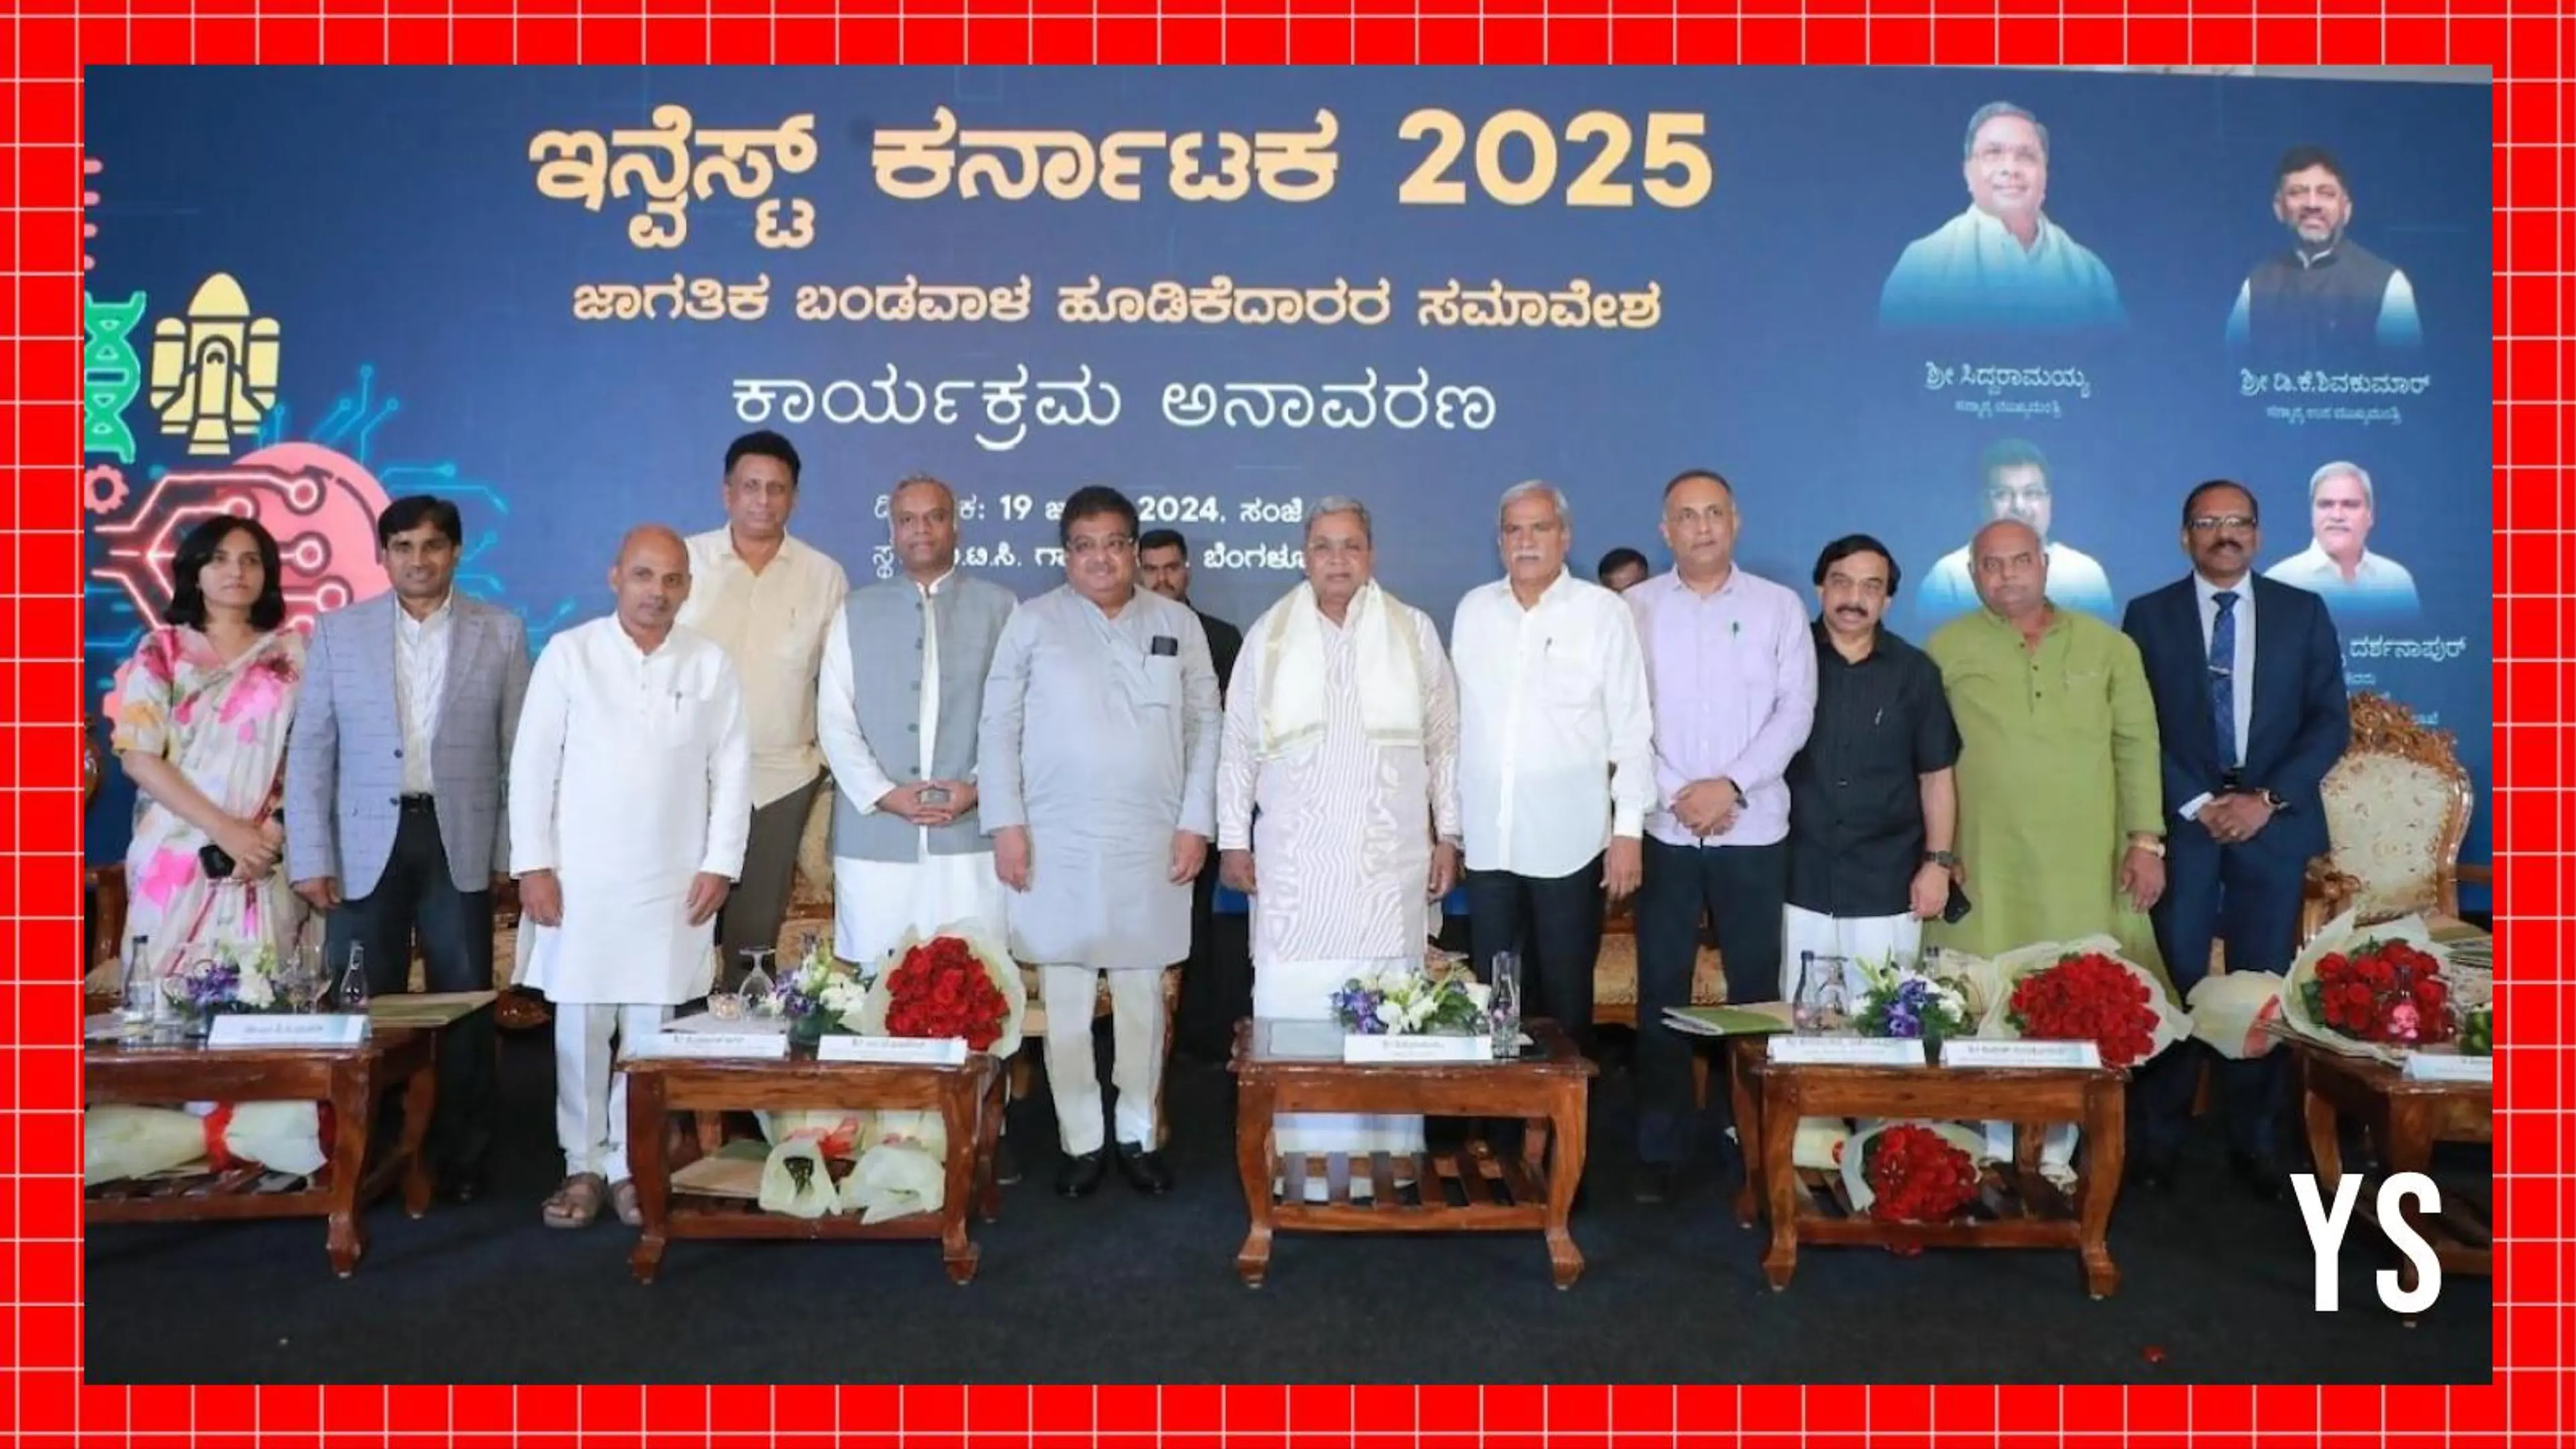 Karnataka aims for 15-16% industrial growth, says CM Siddaramaiah